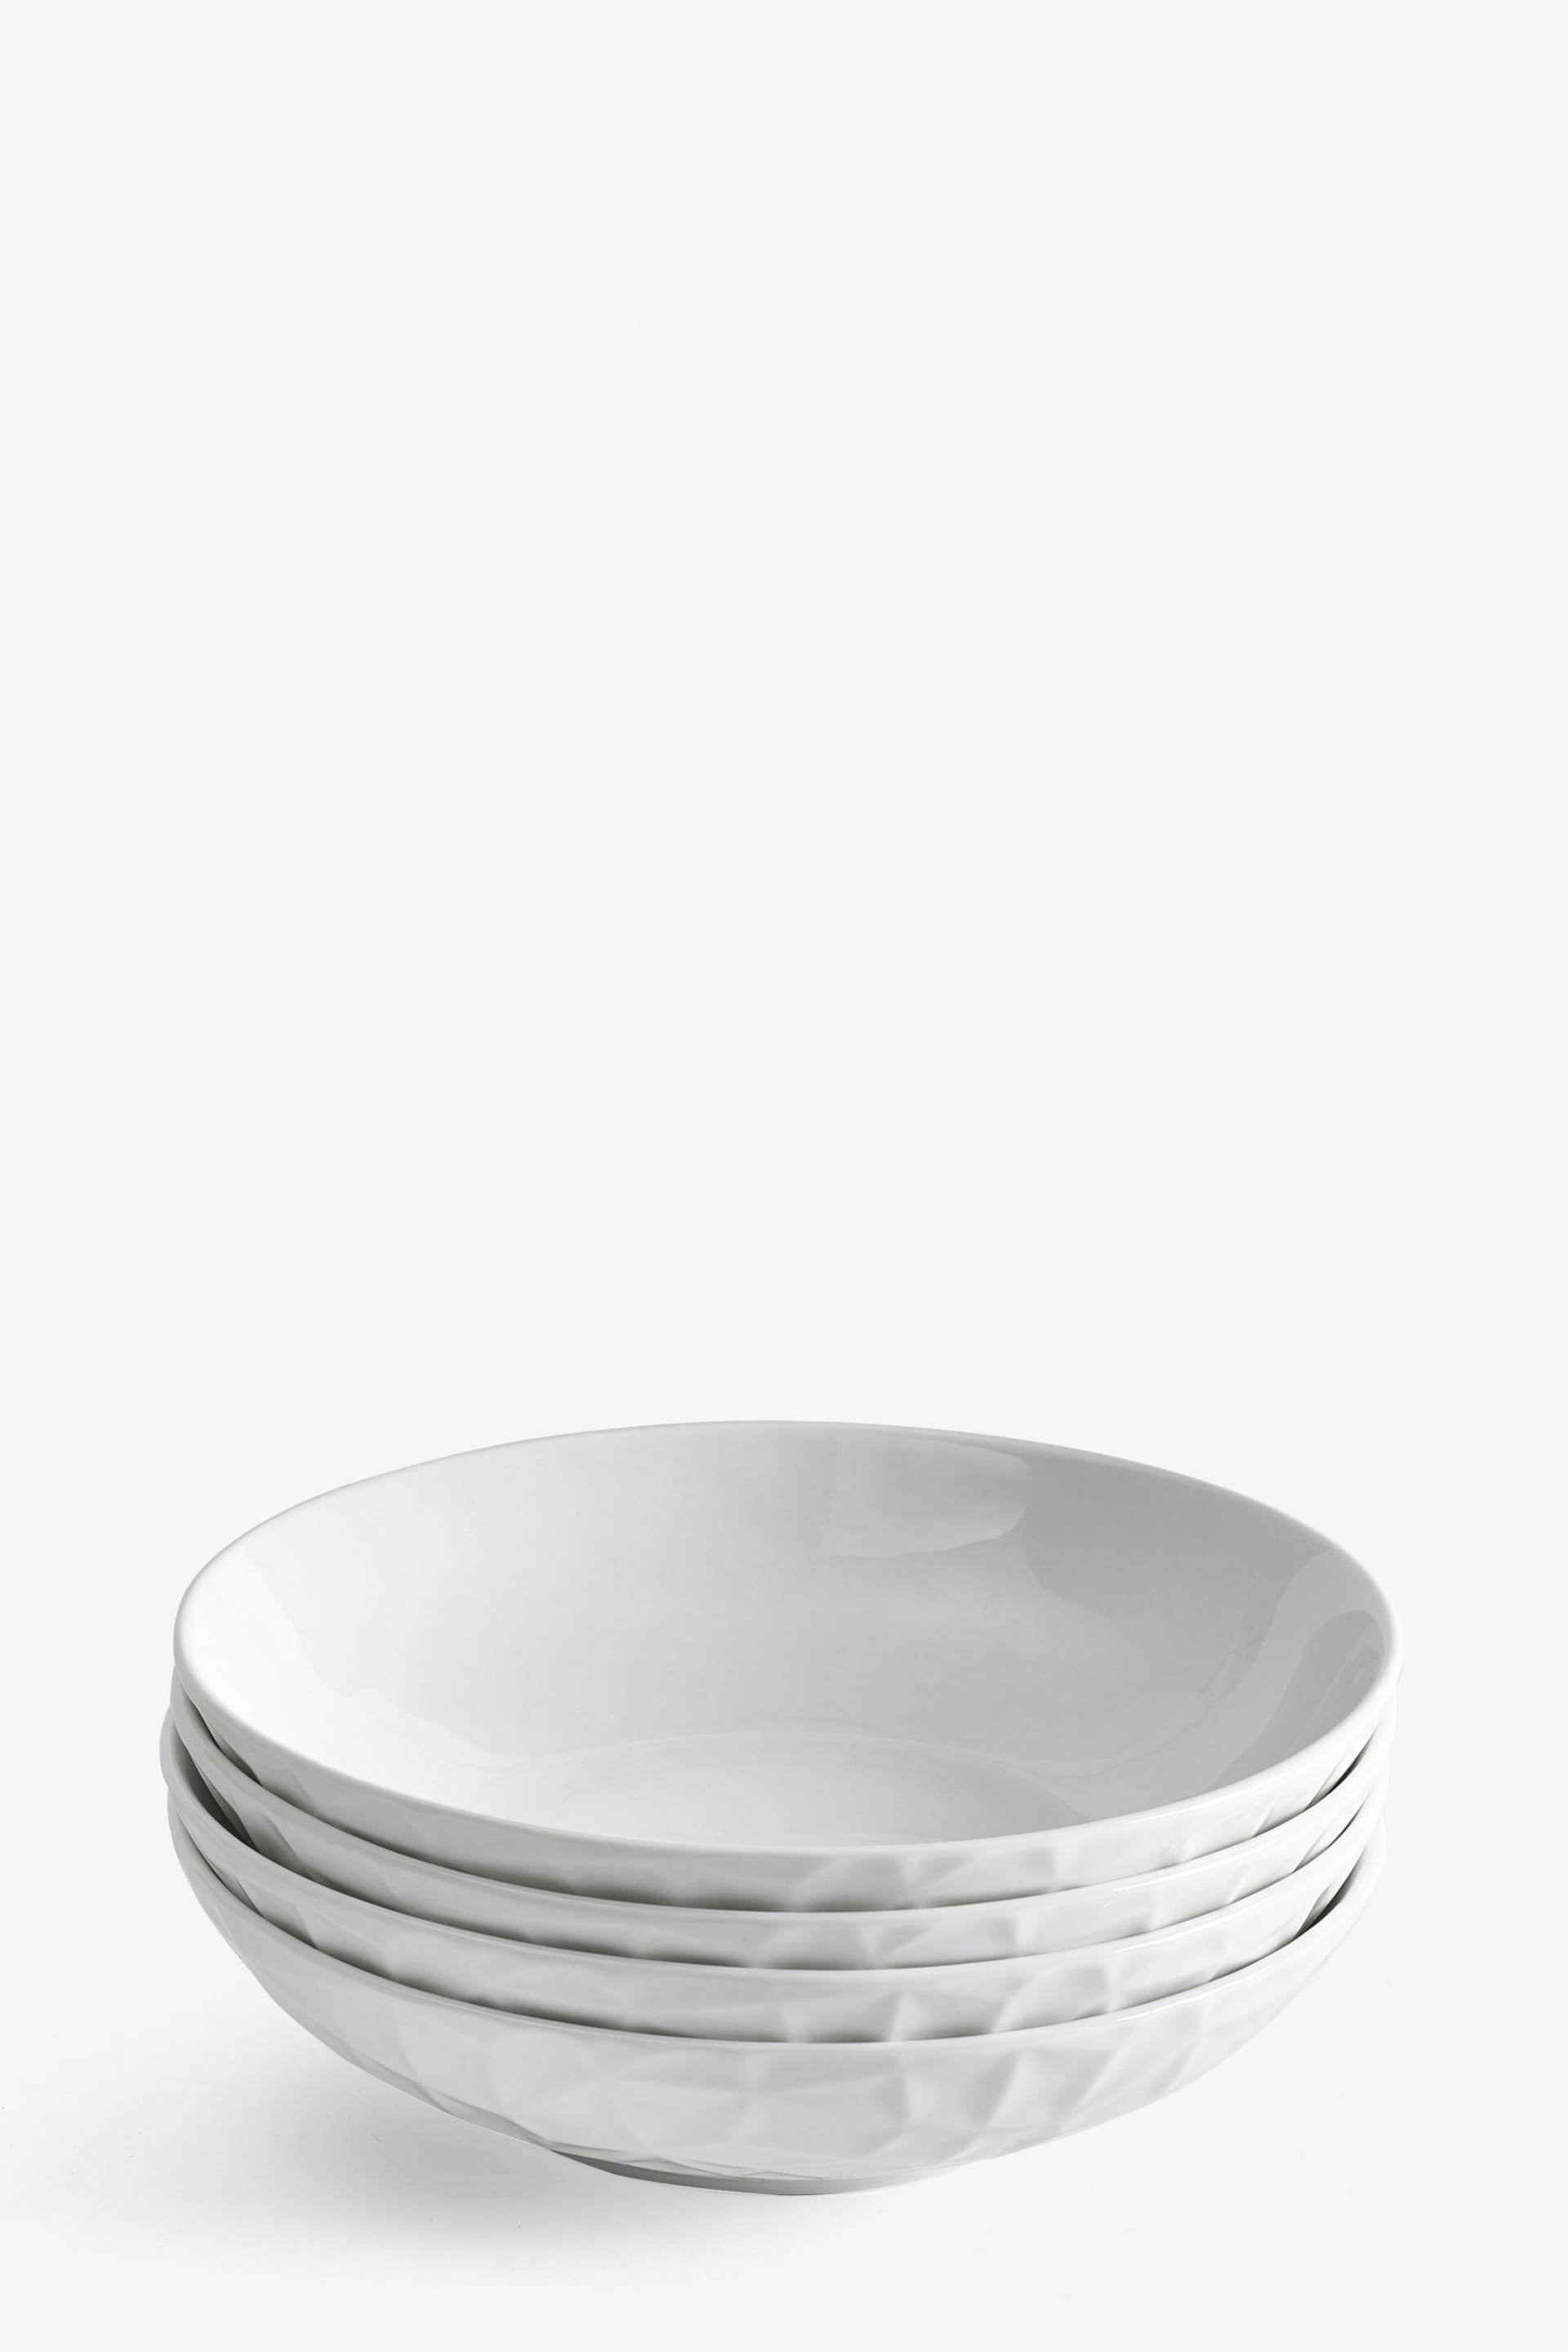 White Mode Embossed Set of 4 Pasta Bowls - Image 3 of 3